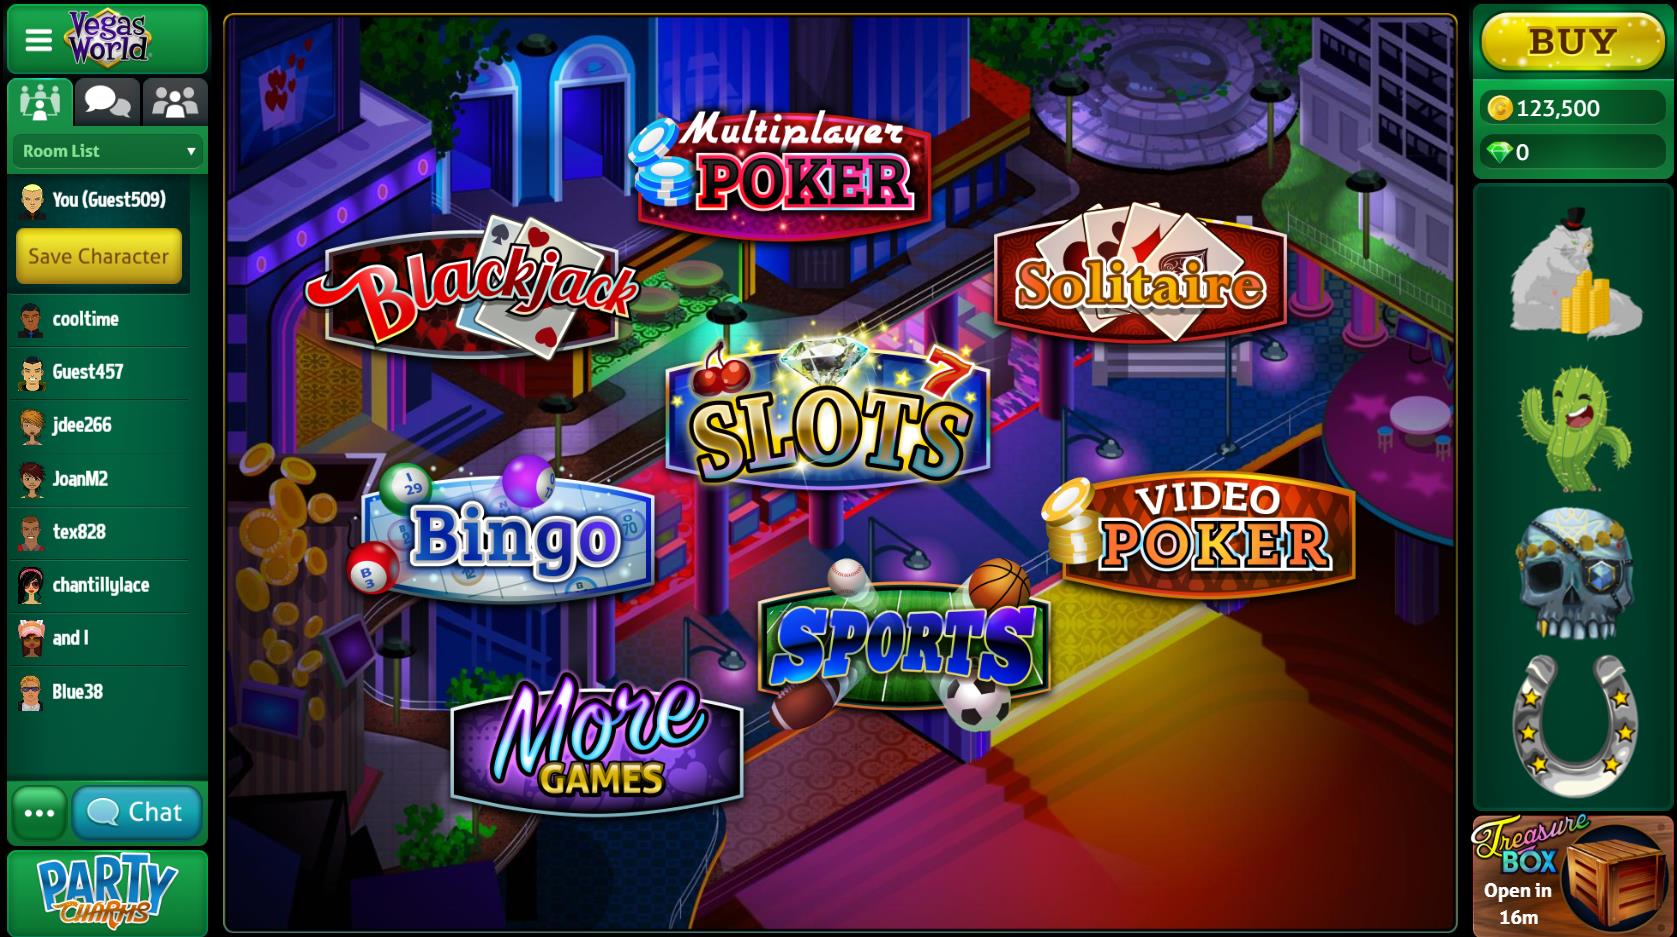 Games In Vegas Casinos